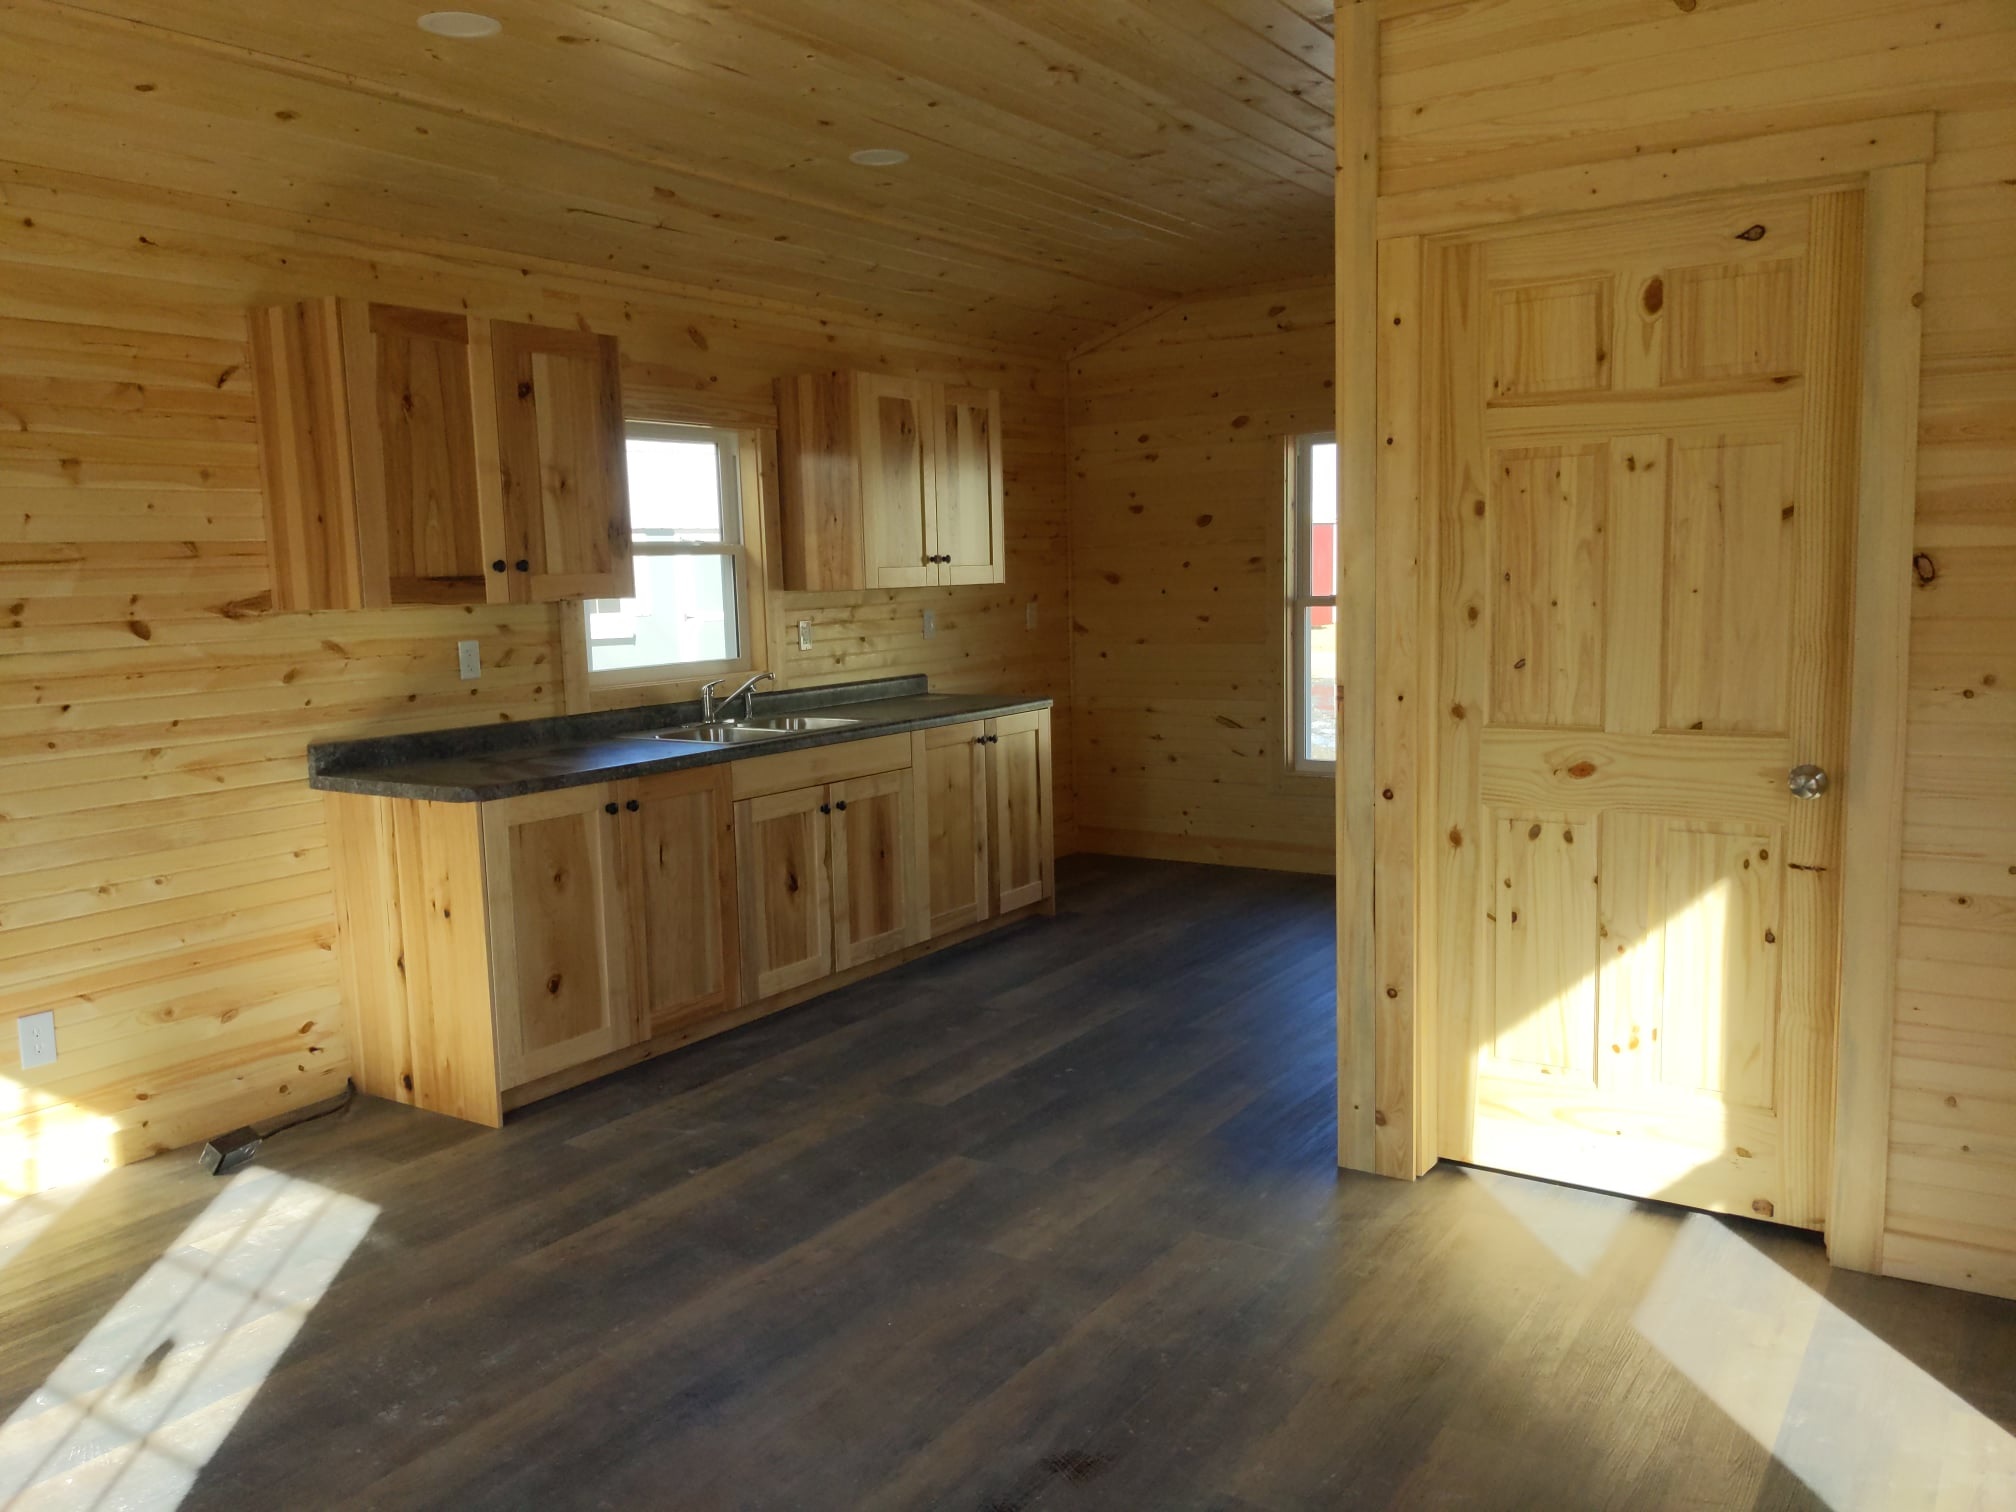 16x24 Studio Cabin Tiny Home Kansas City MO Joplin MO Lake of the Ozarks MO